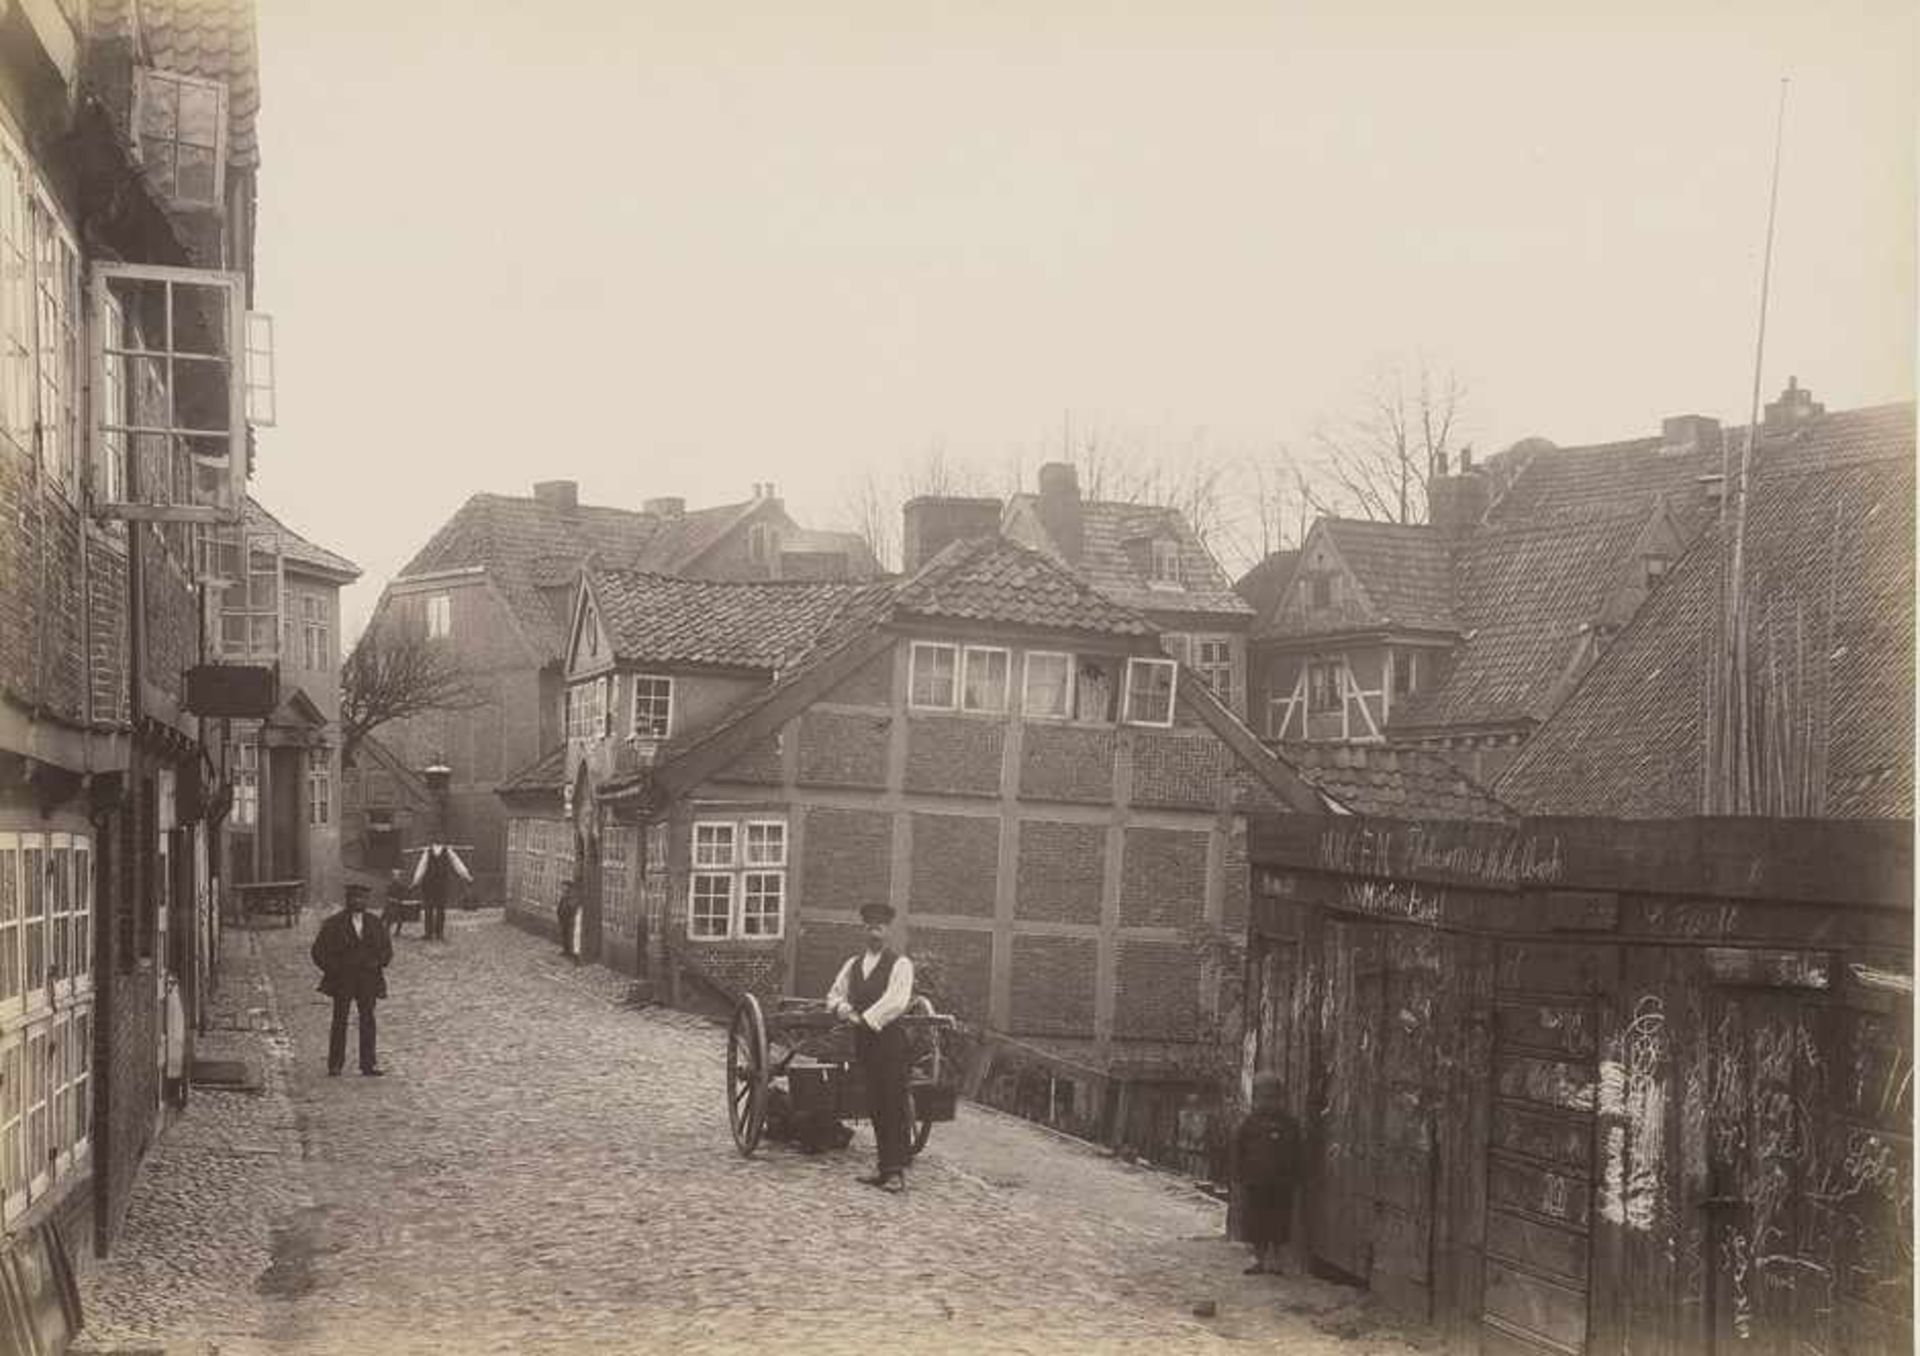 Koppmann, Georg: Views of HamburgViews of Hamburg. 1871 - 1903. 28 large-format albumen prints. Each